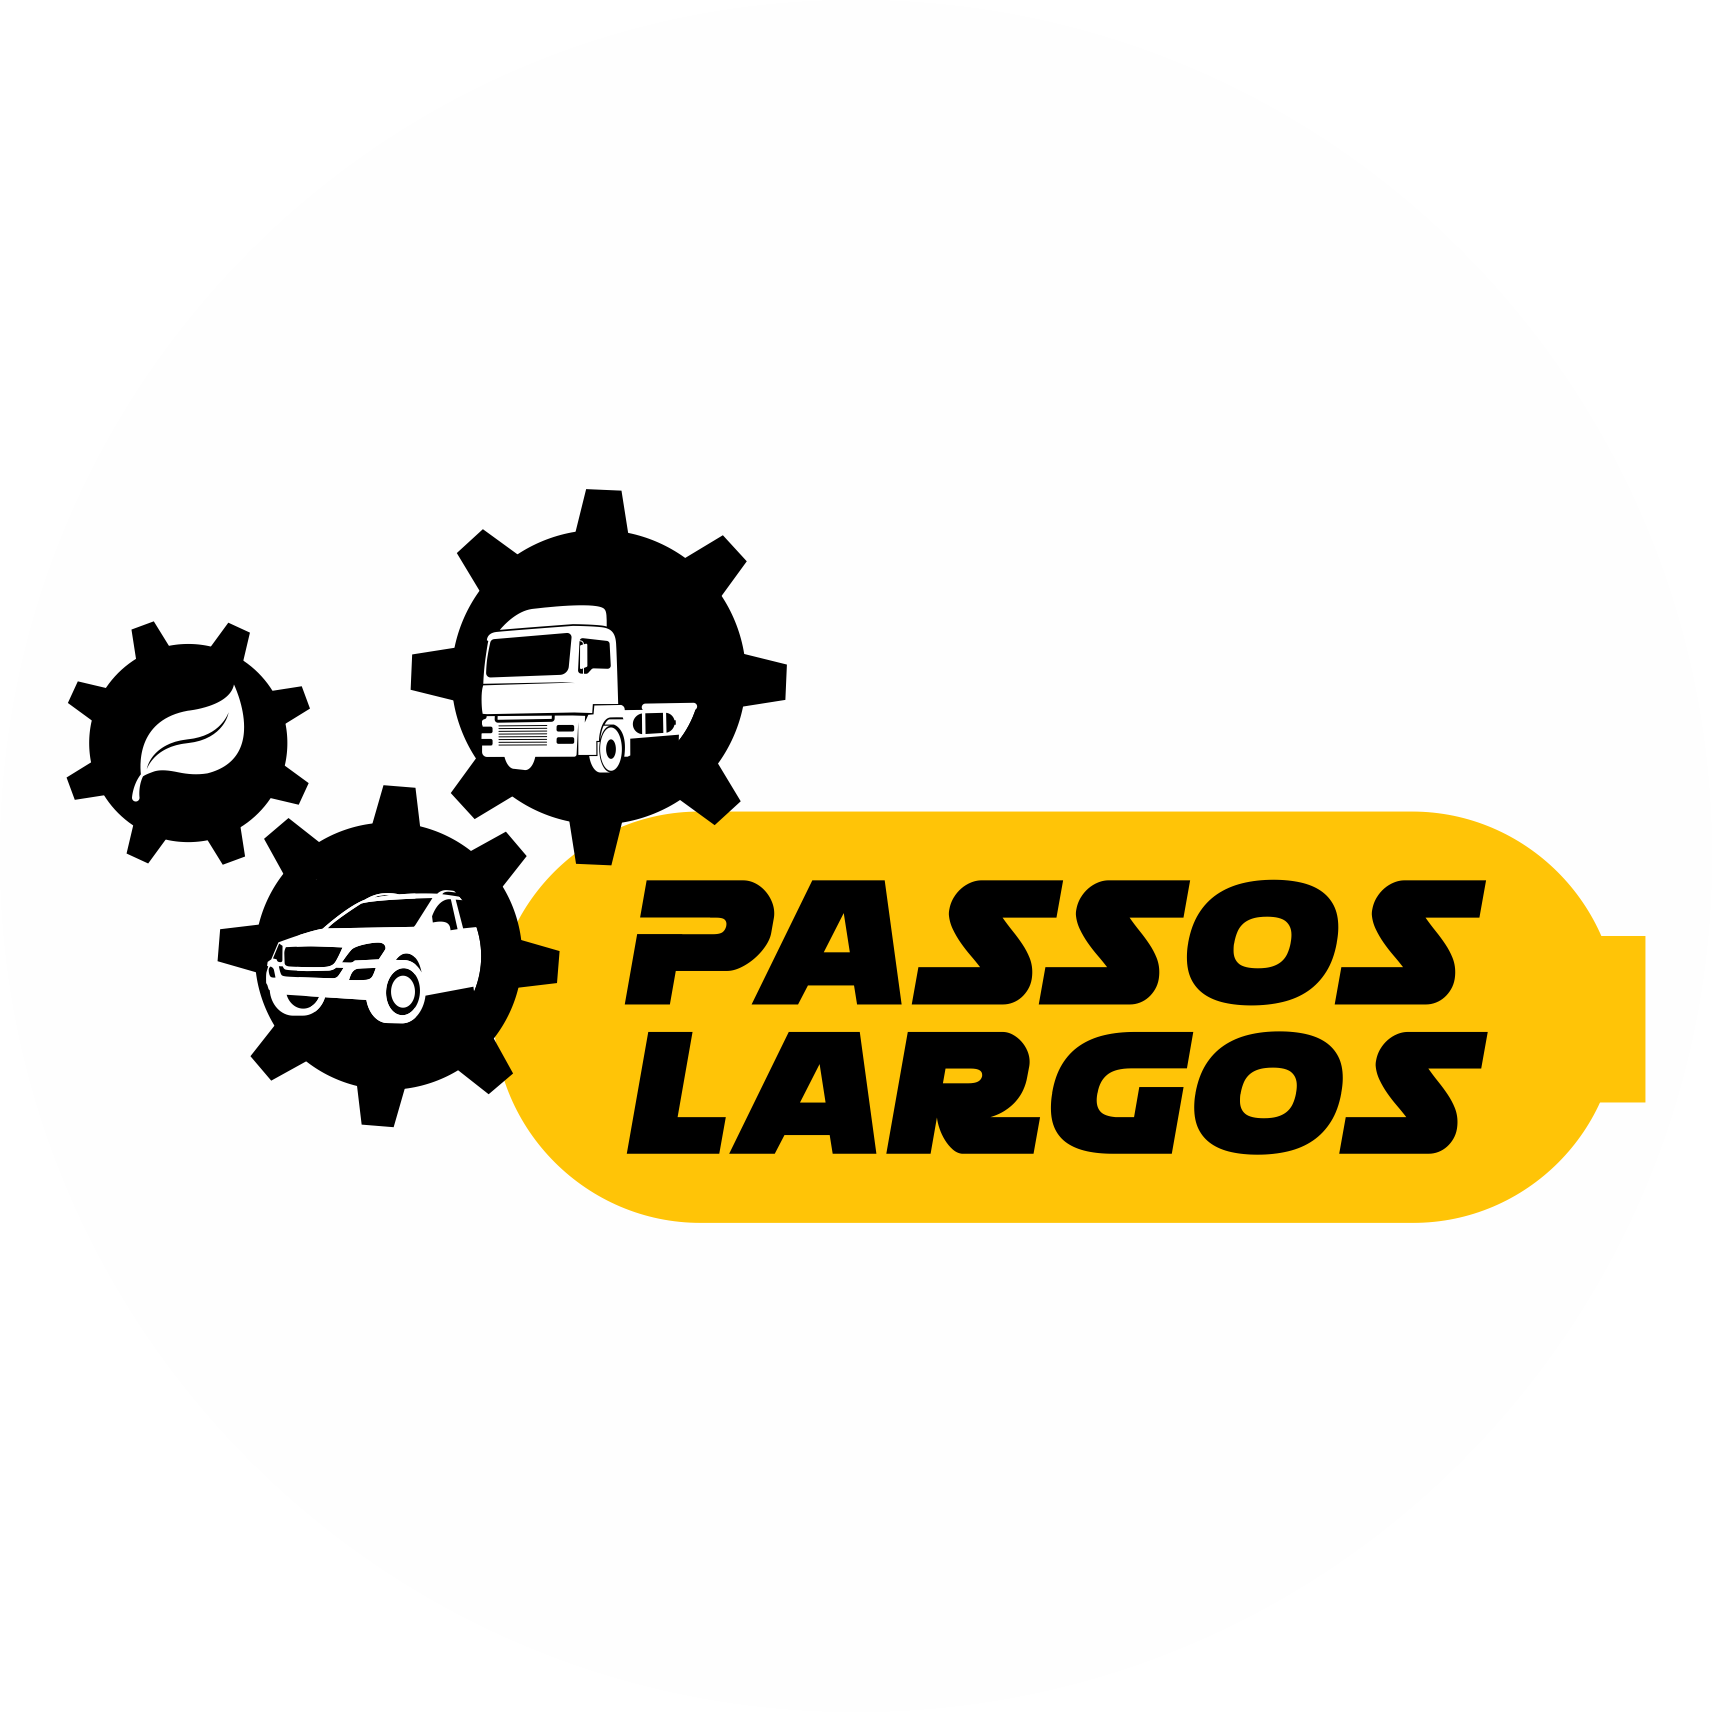 PASSOS_LARGOS_clikame